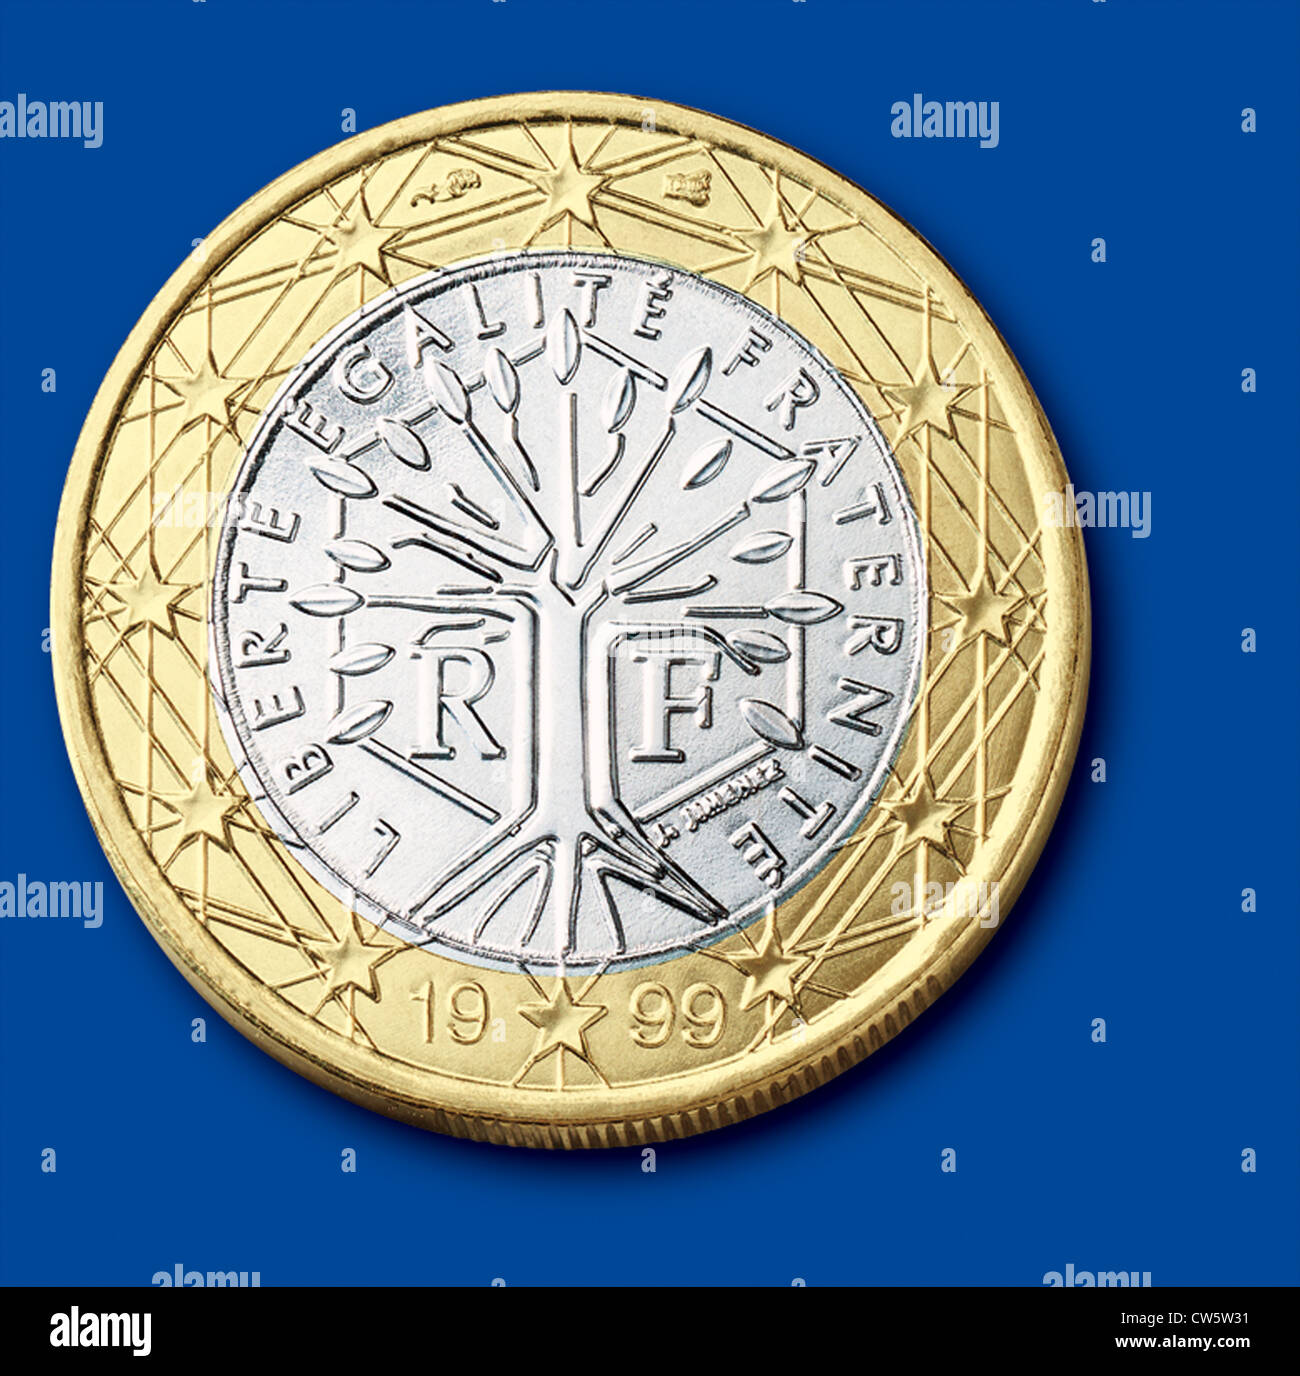 Moneta da 1 euro (Francia Foto stock - Alamy